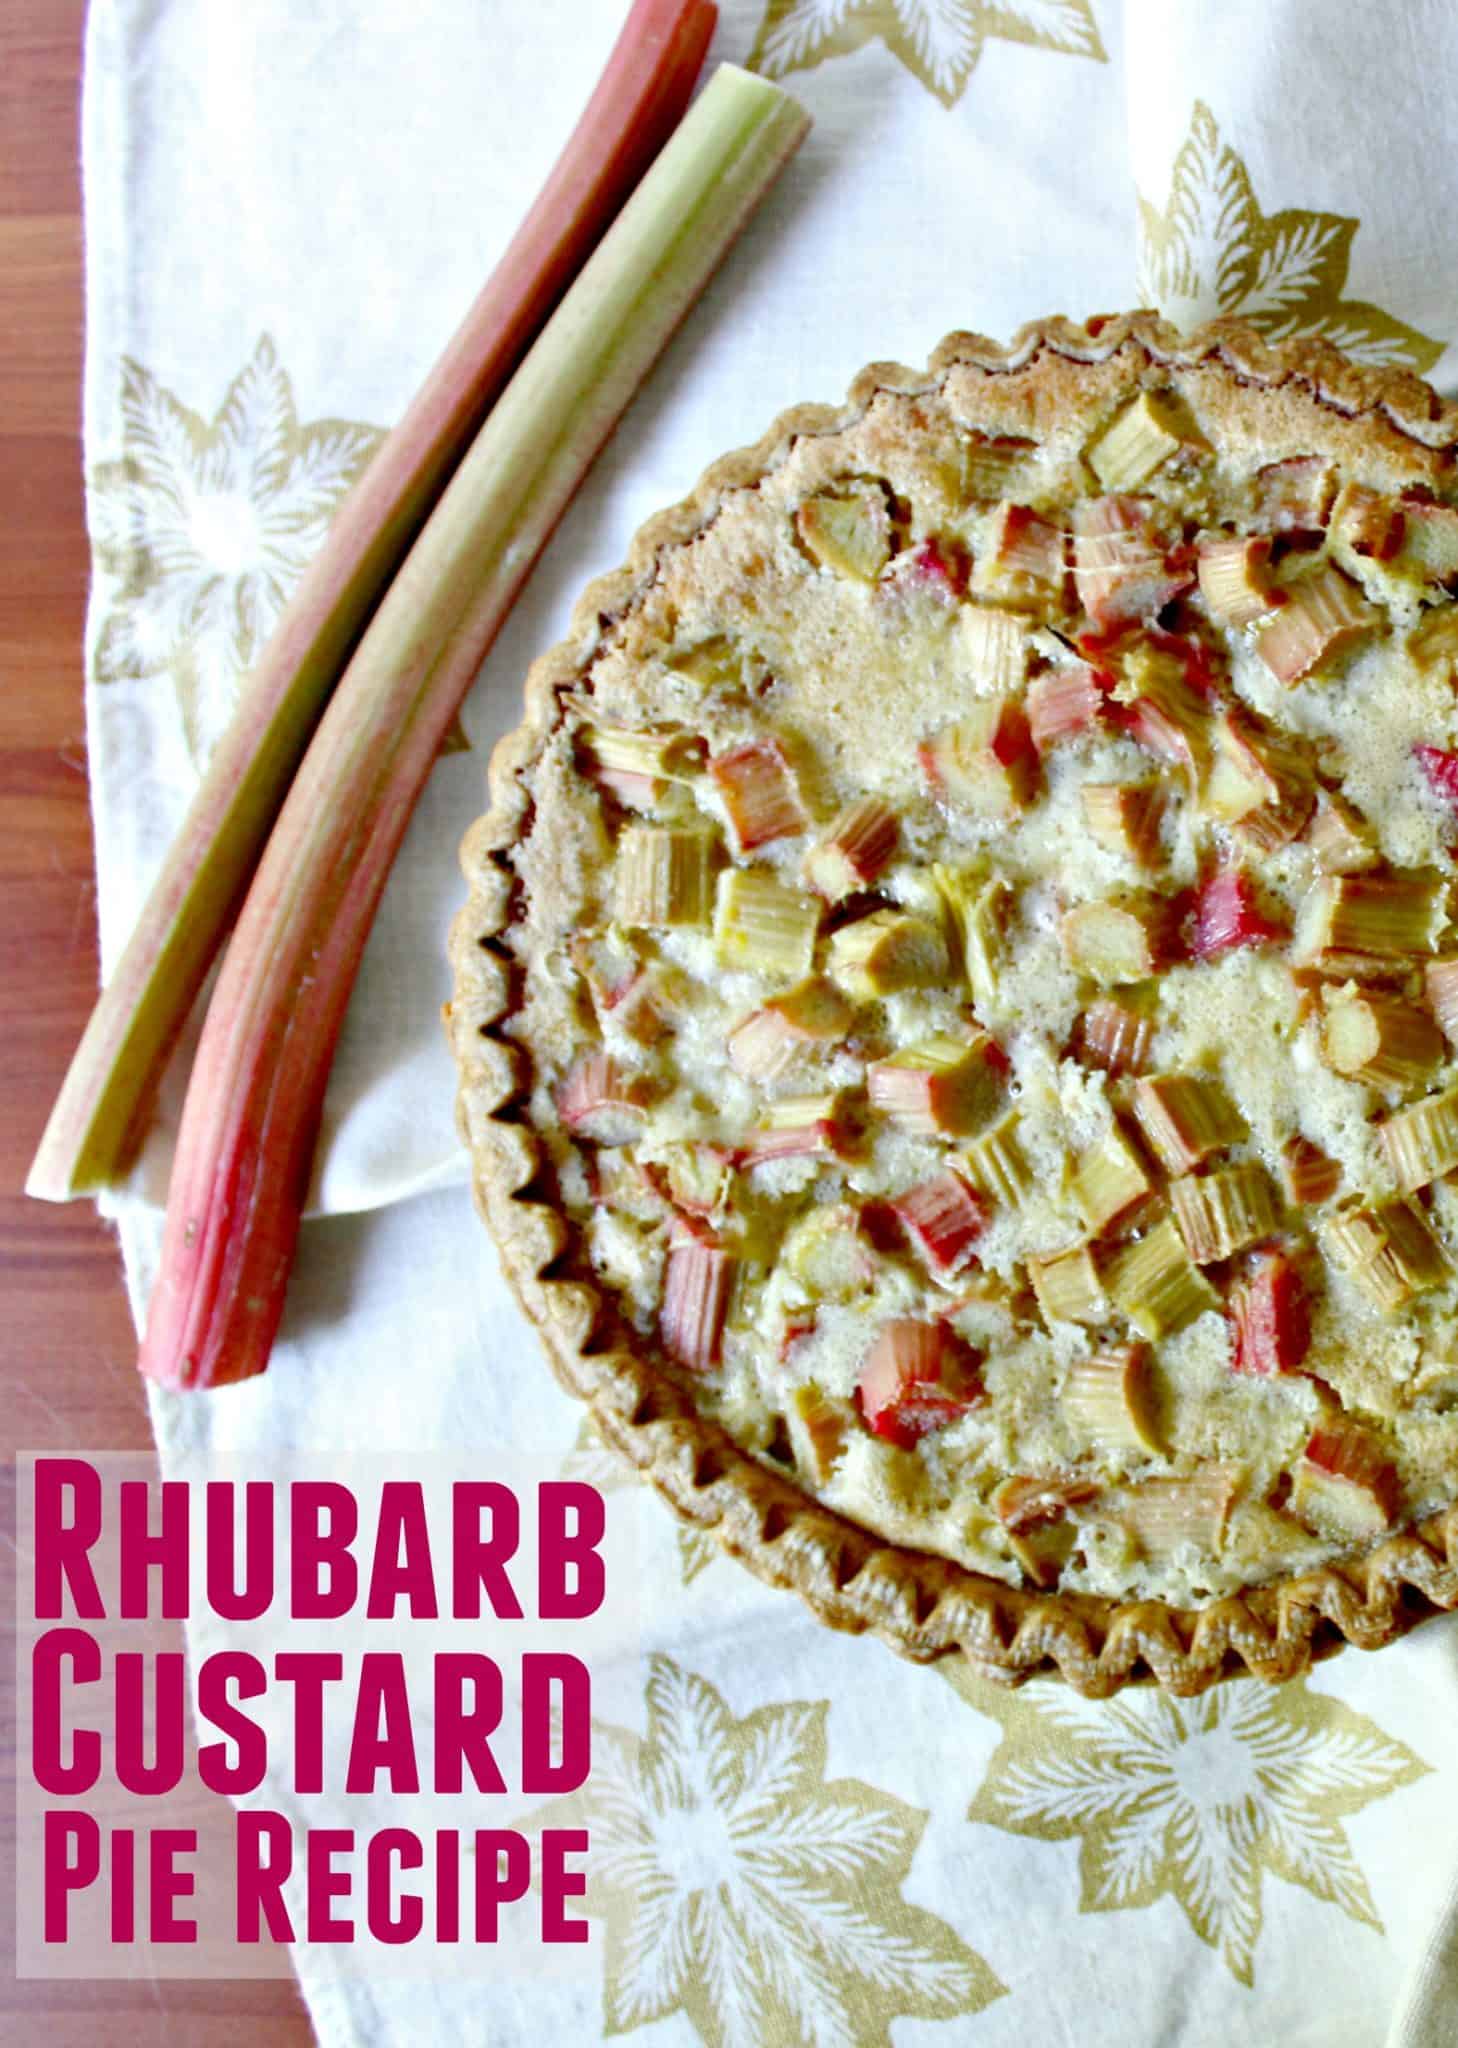 How to Make a Rhubarb Custard Pie With No Milk